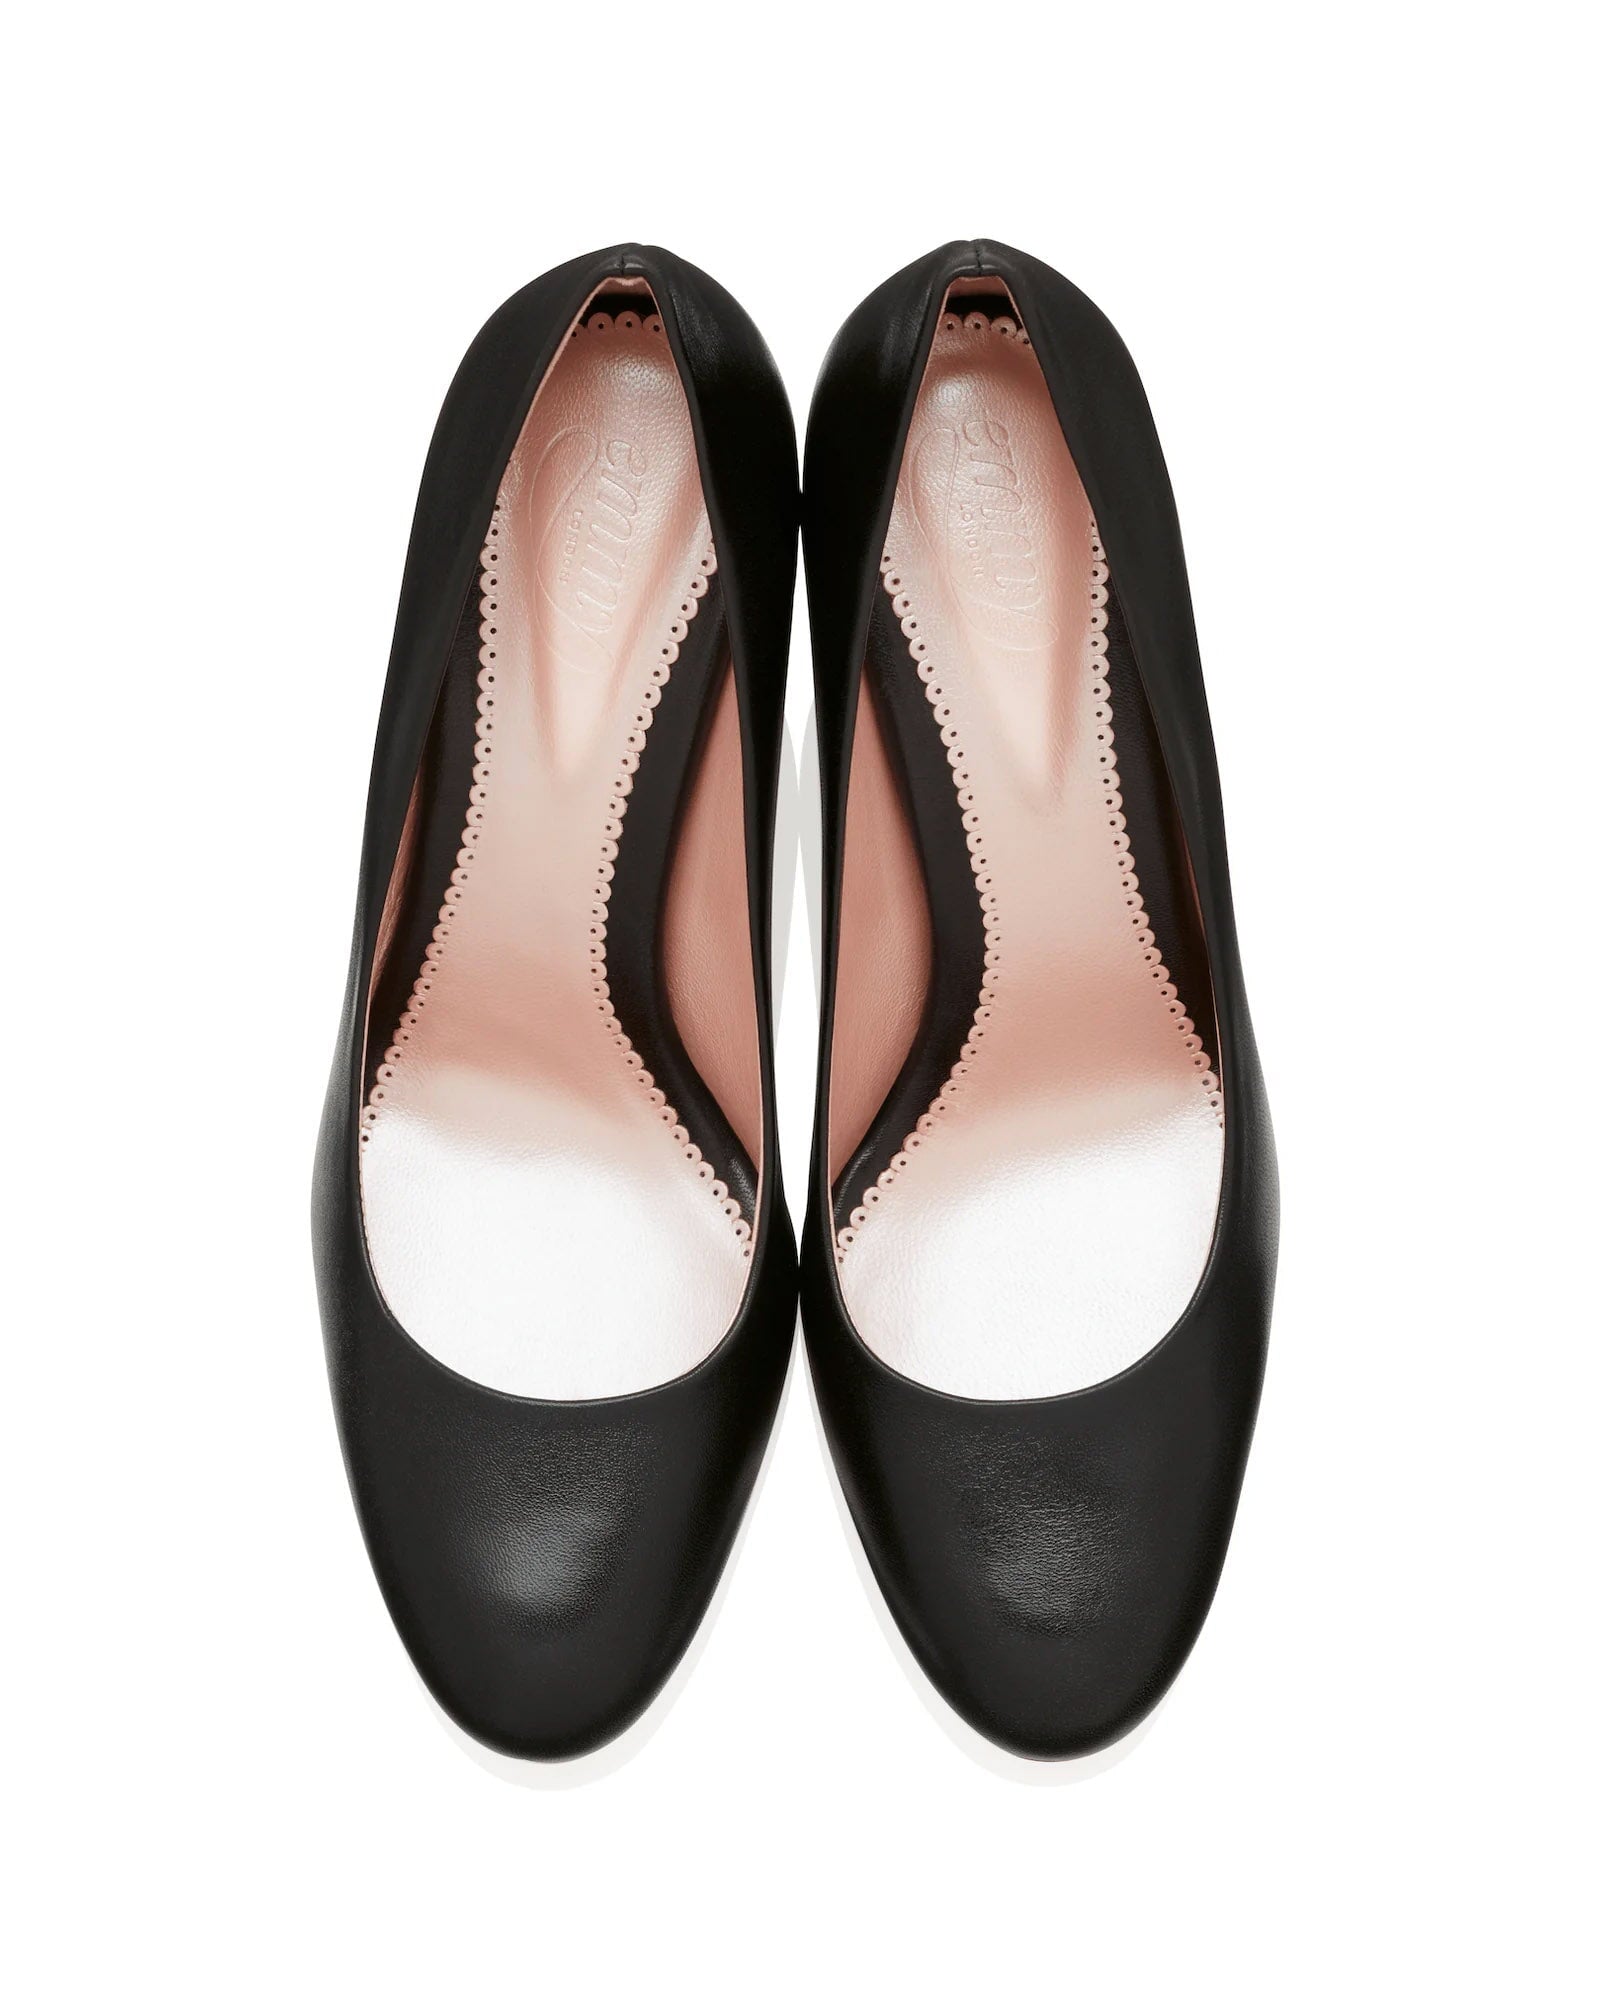 Mia Black Leather Fashion Shoe Block Heel Court Shoe  image